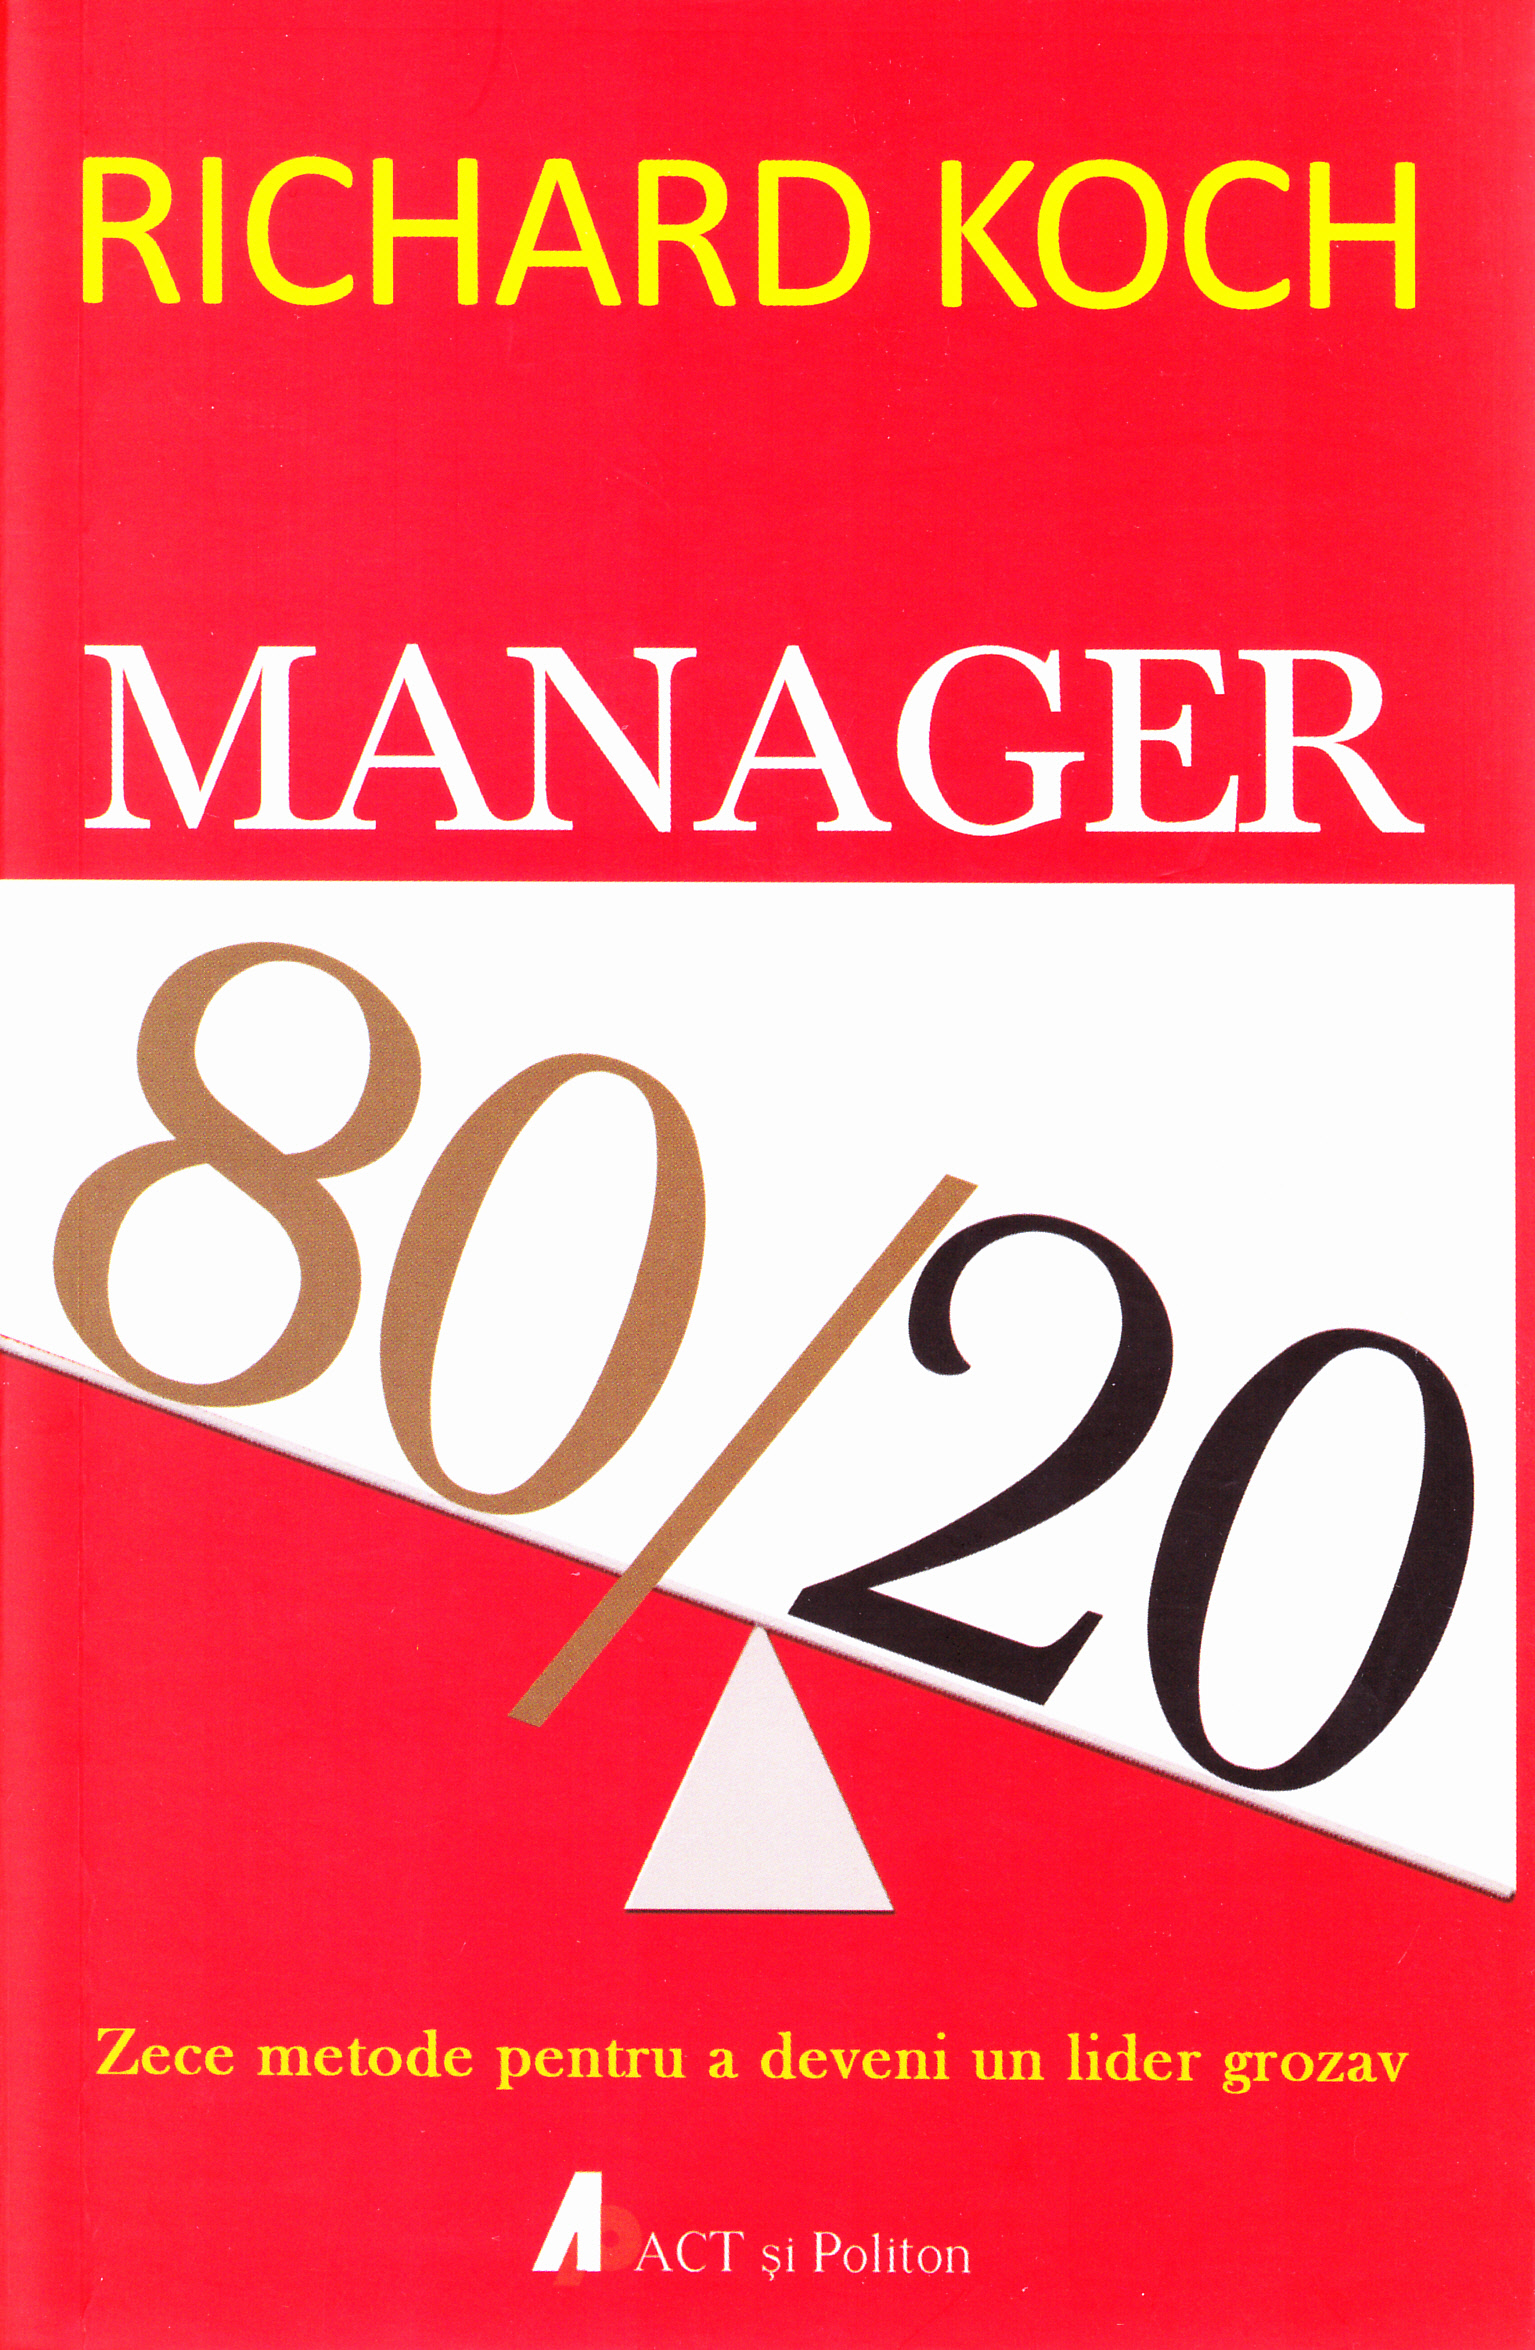 Manager 80/20 - Richard Koch